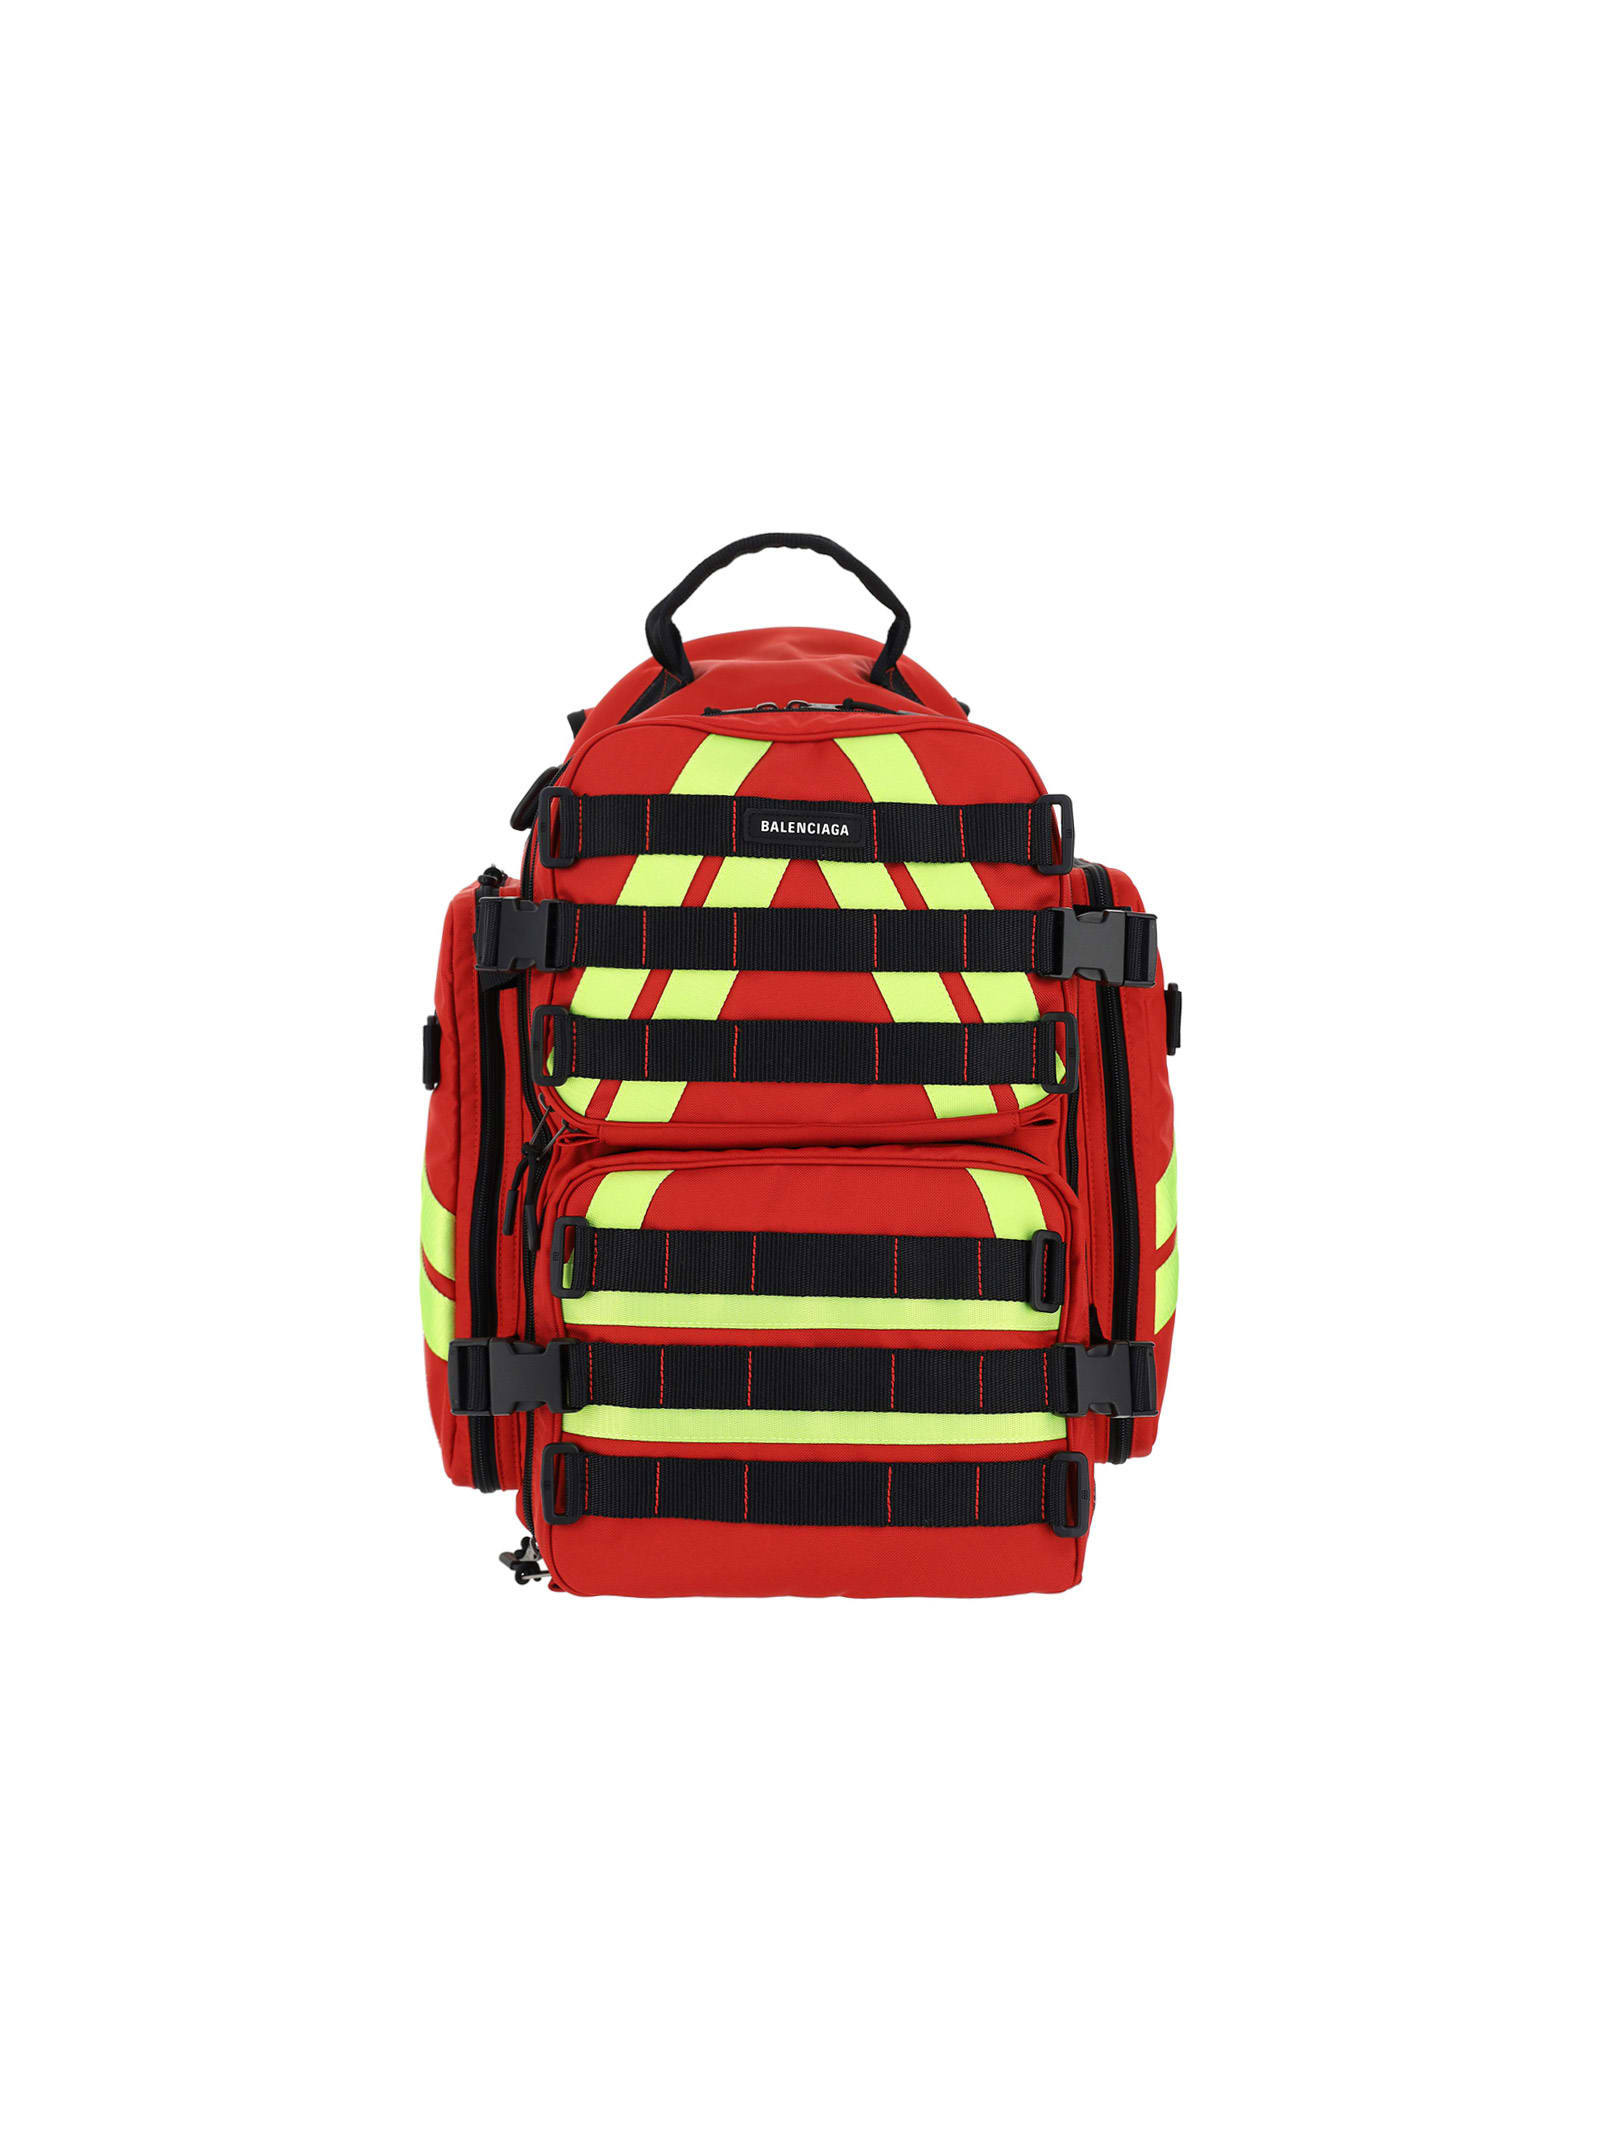 Balenciaga Fire Backpack